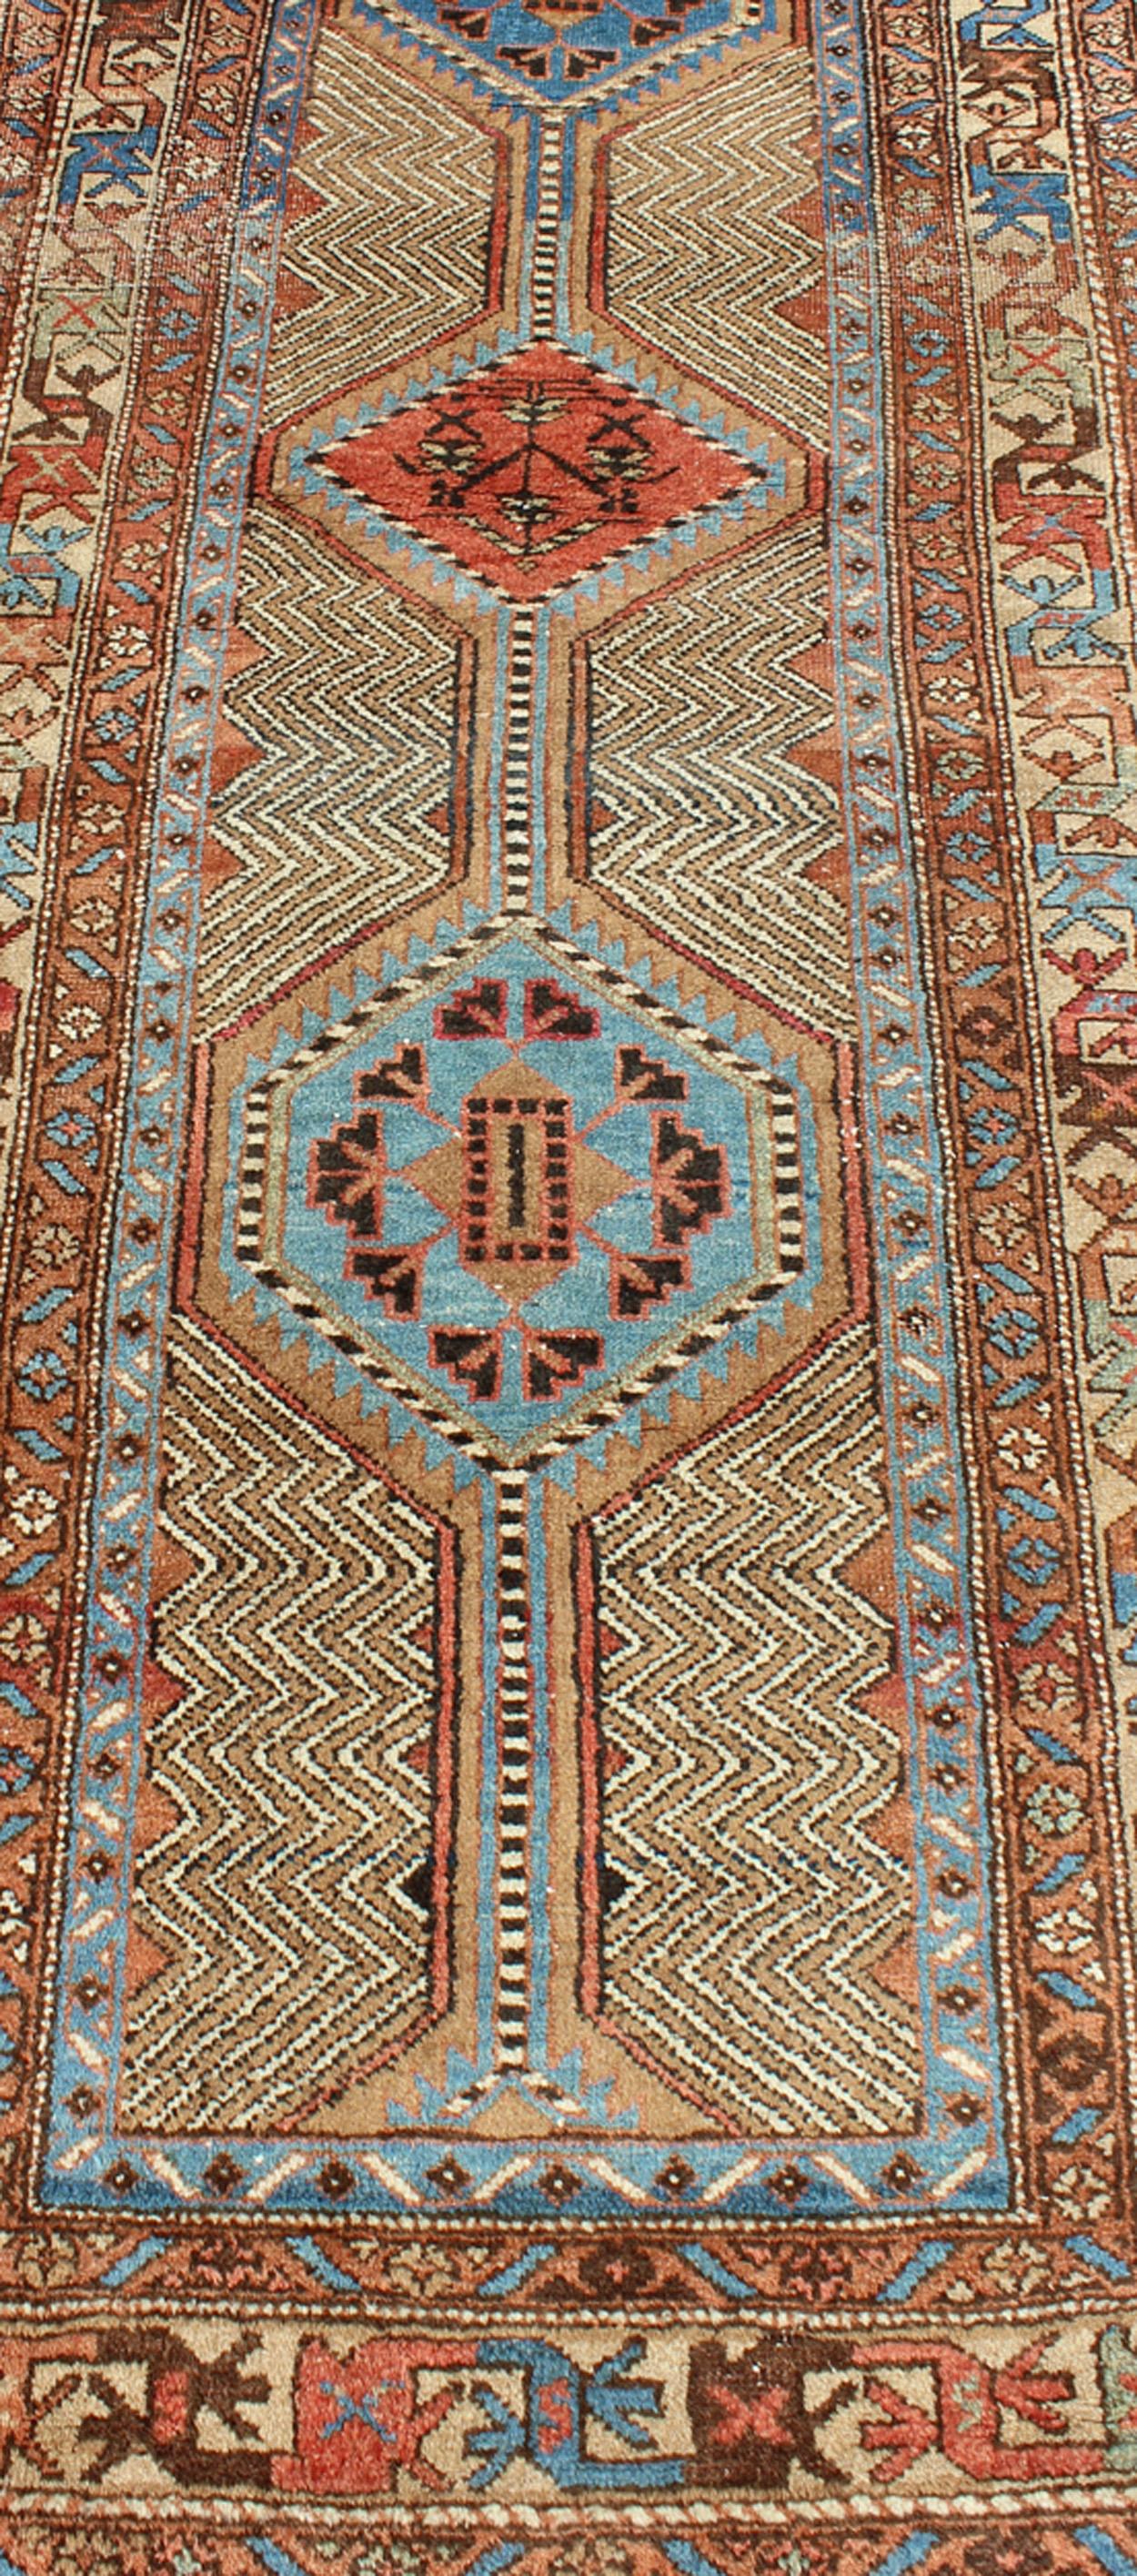 Colorful Antique Persian Serab Gallery Rug with Unique Geometric Design 2